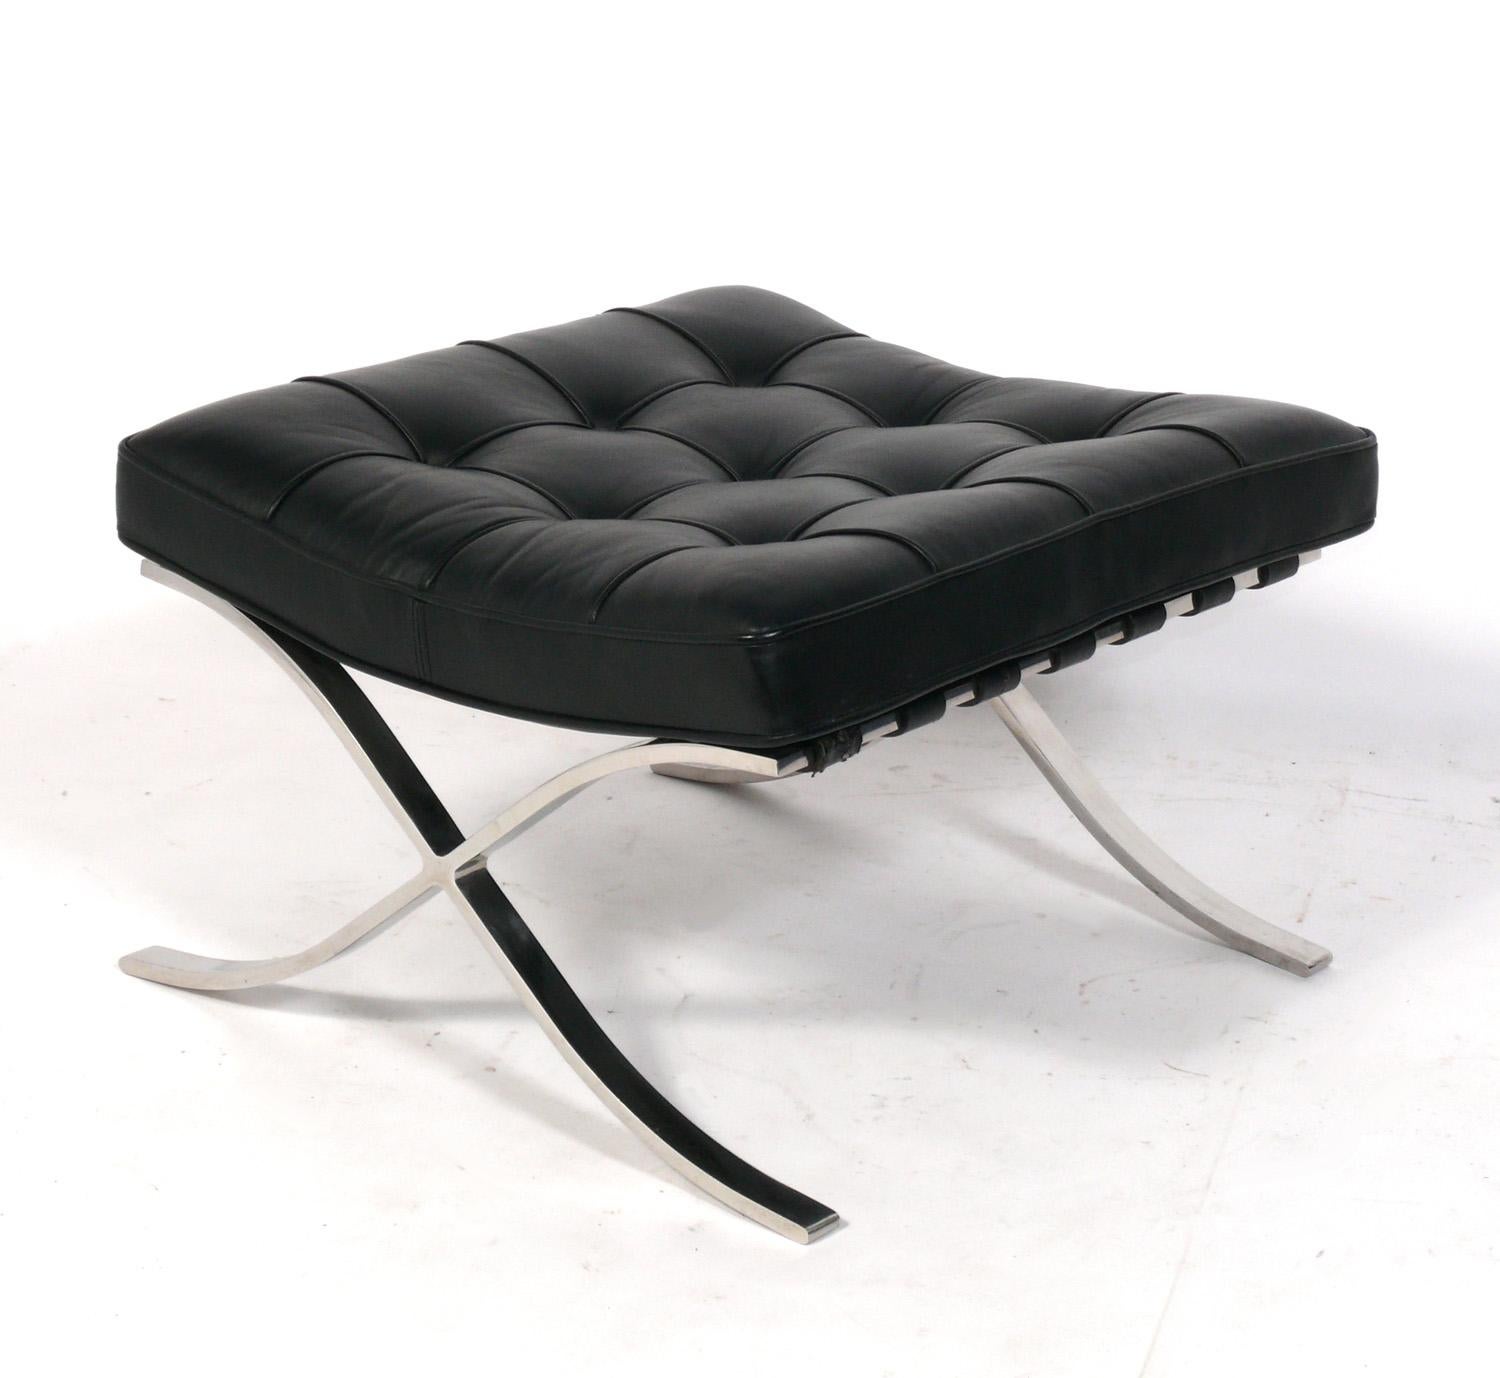 Retro Barcelona Style Ottoman Premiu Leather Black & White Footstool for Bedroom 